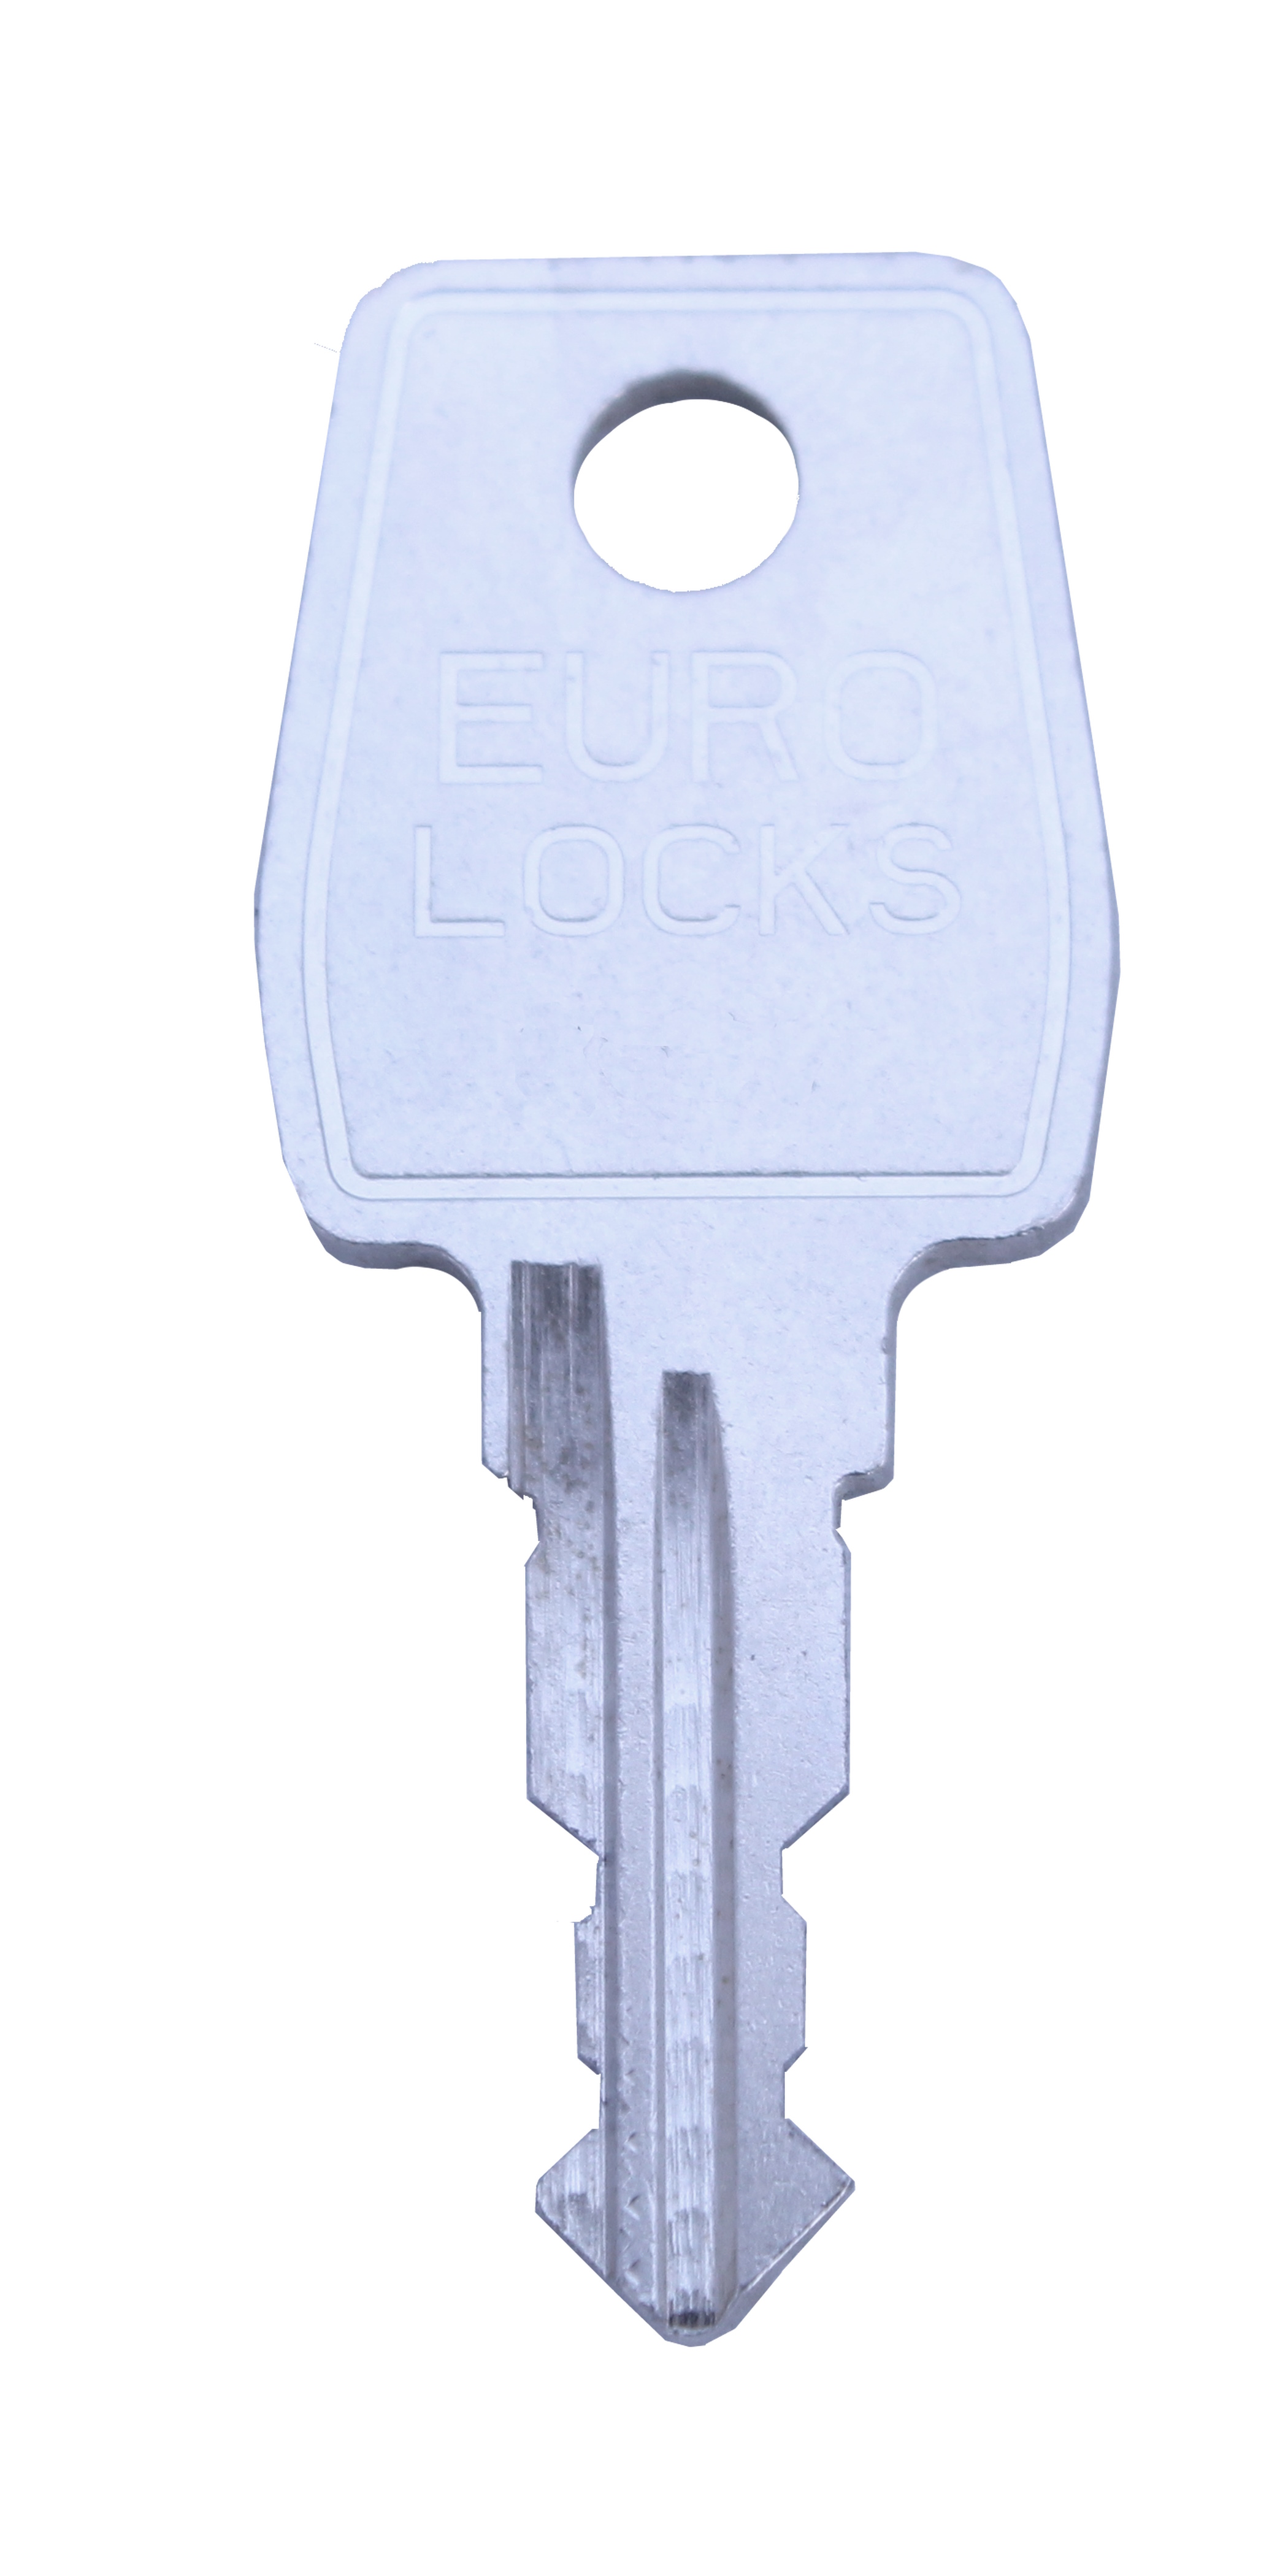 EUROLOCKS Key - Serie 9001 - 9500